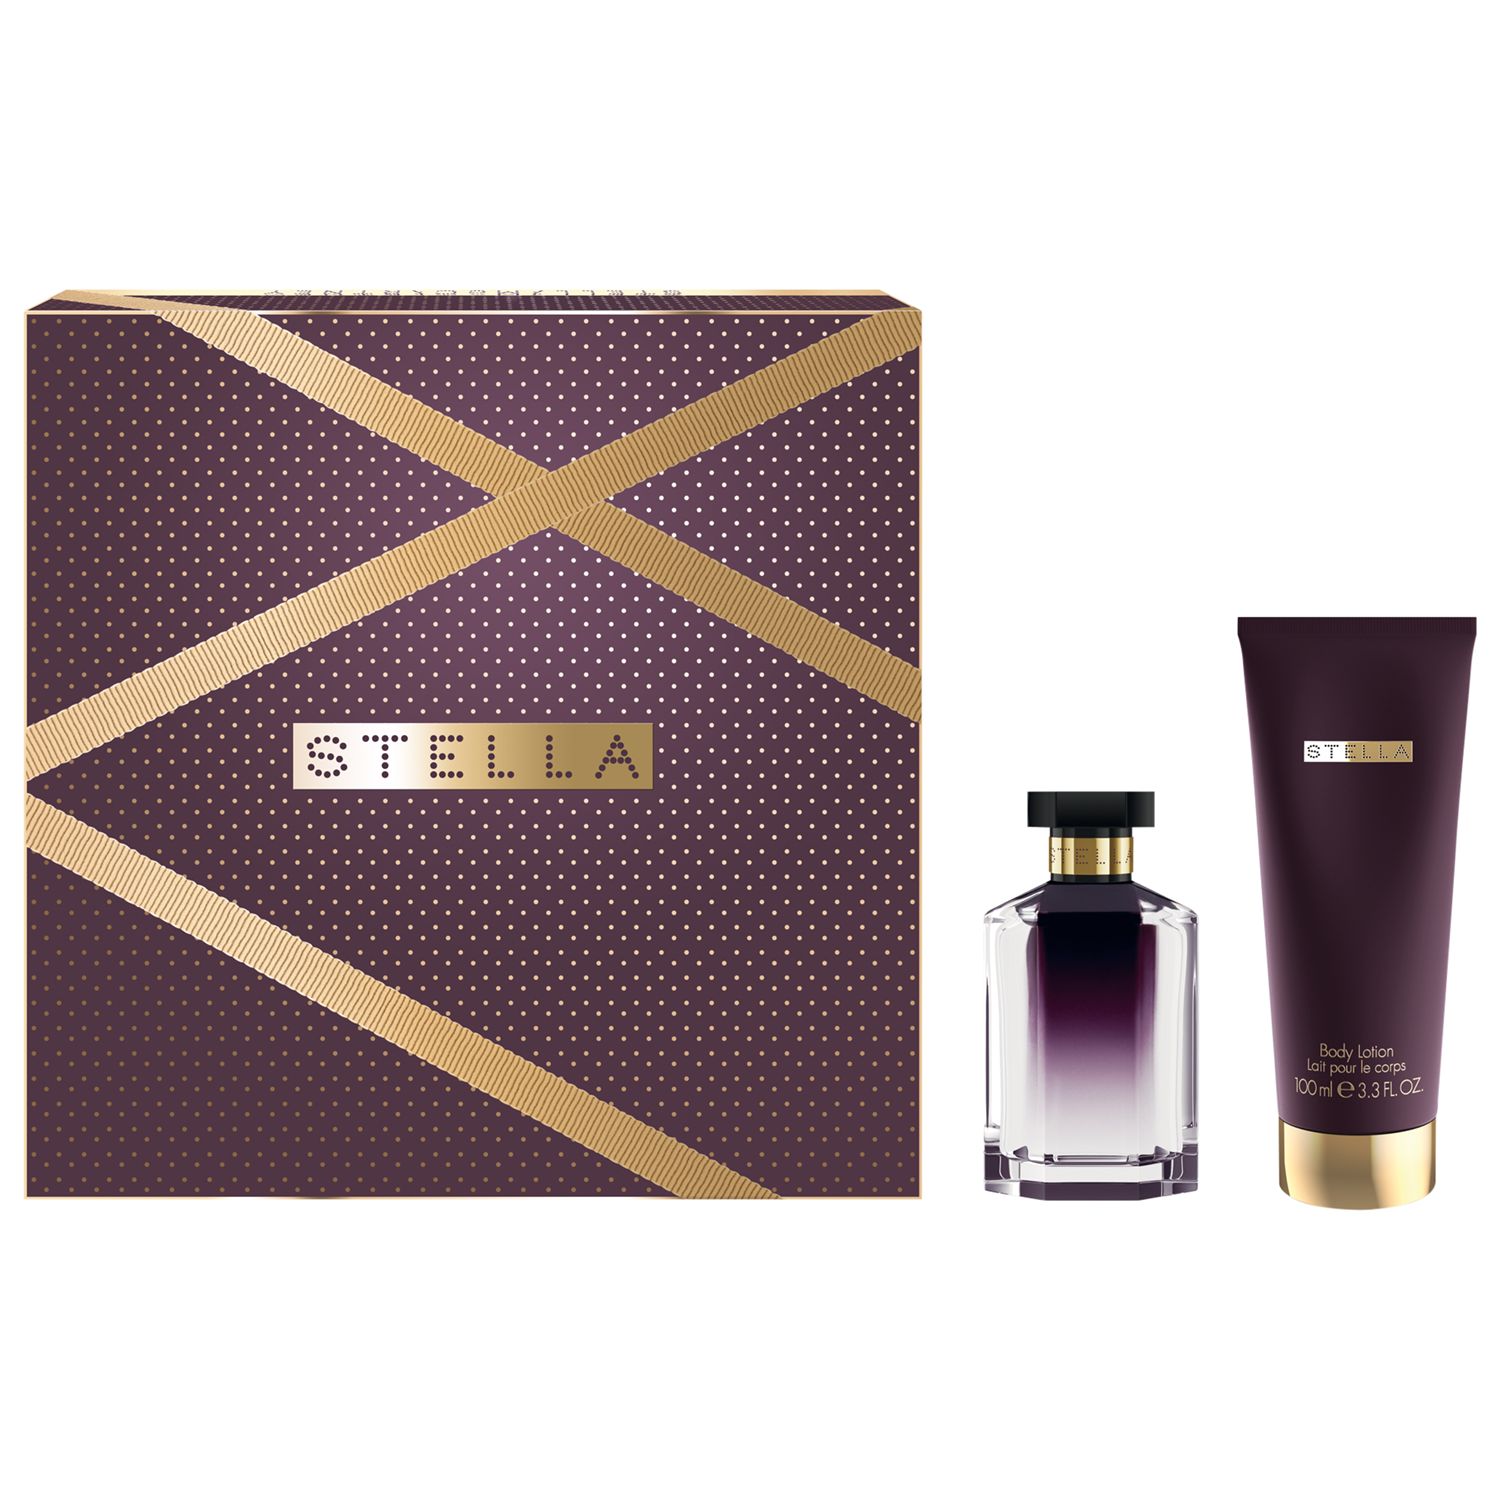 Stella McCartney Eau De Parfum Gift Set at John Lewis & Partners